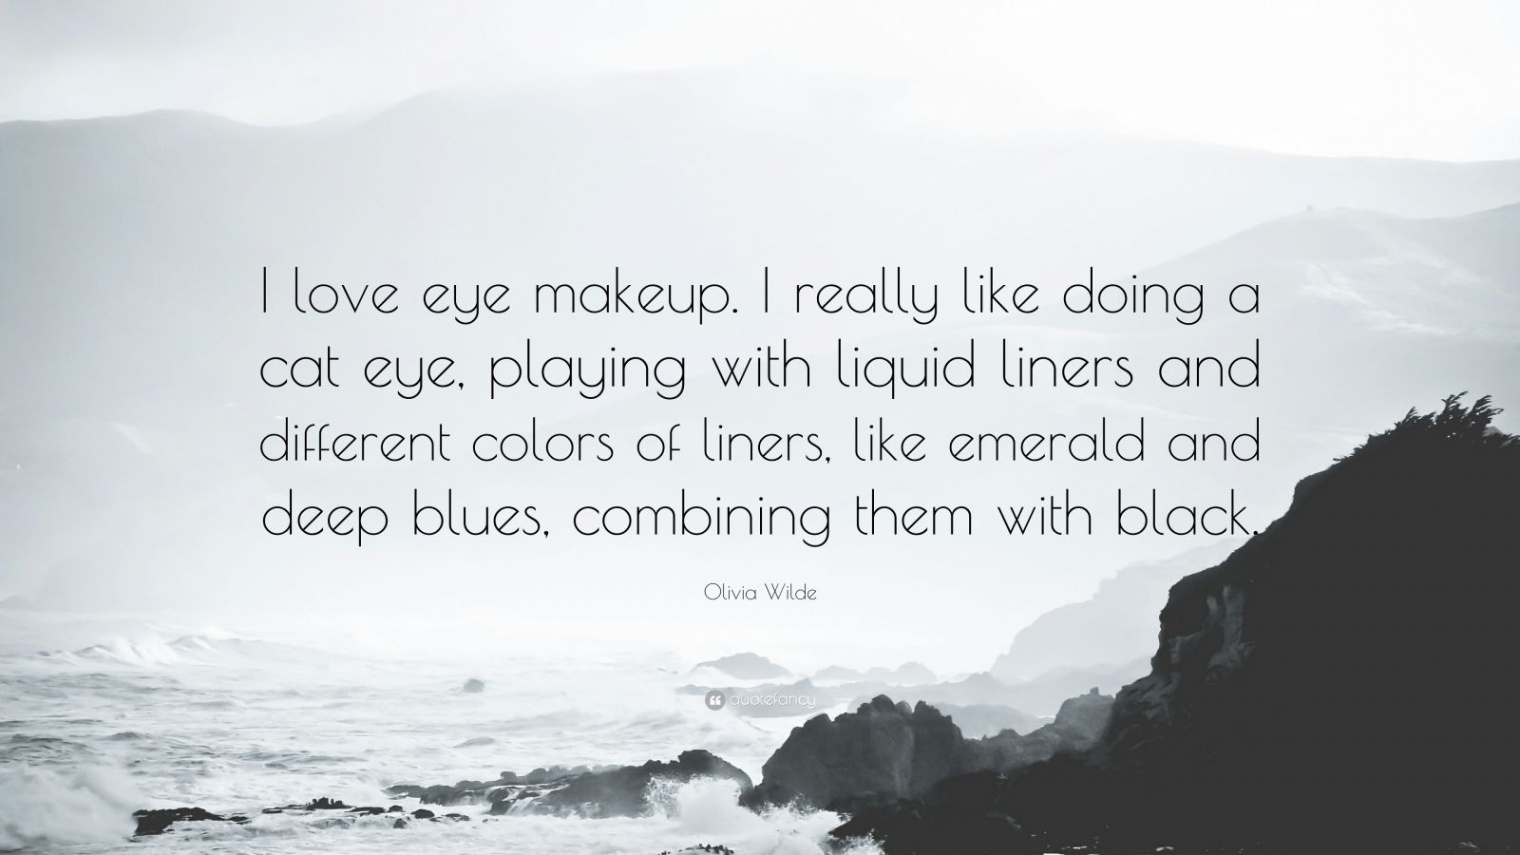 Olivia Wilde Quote: “I love eye makeup